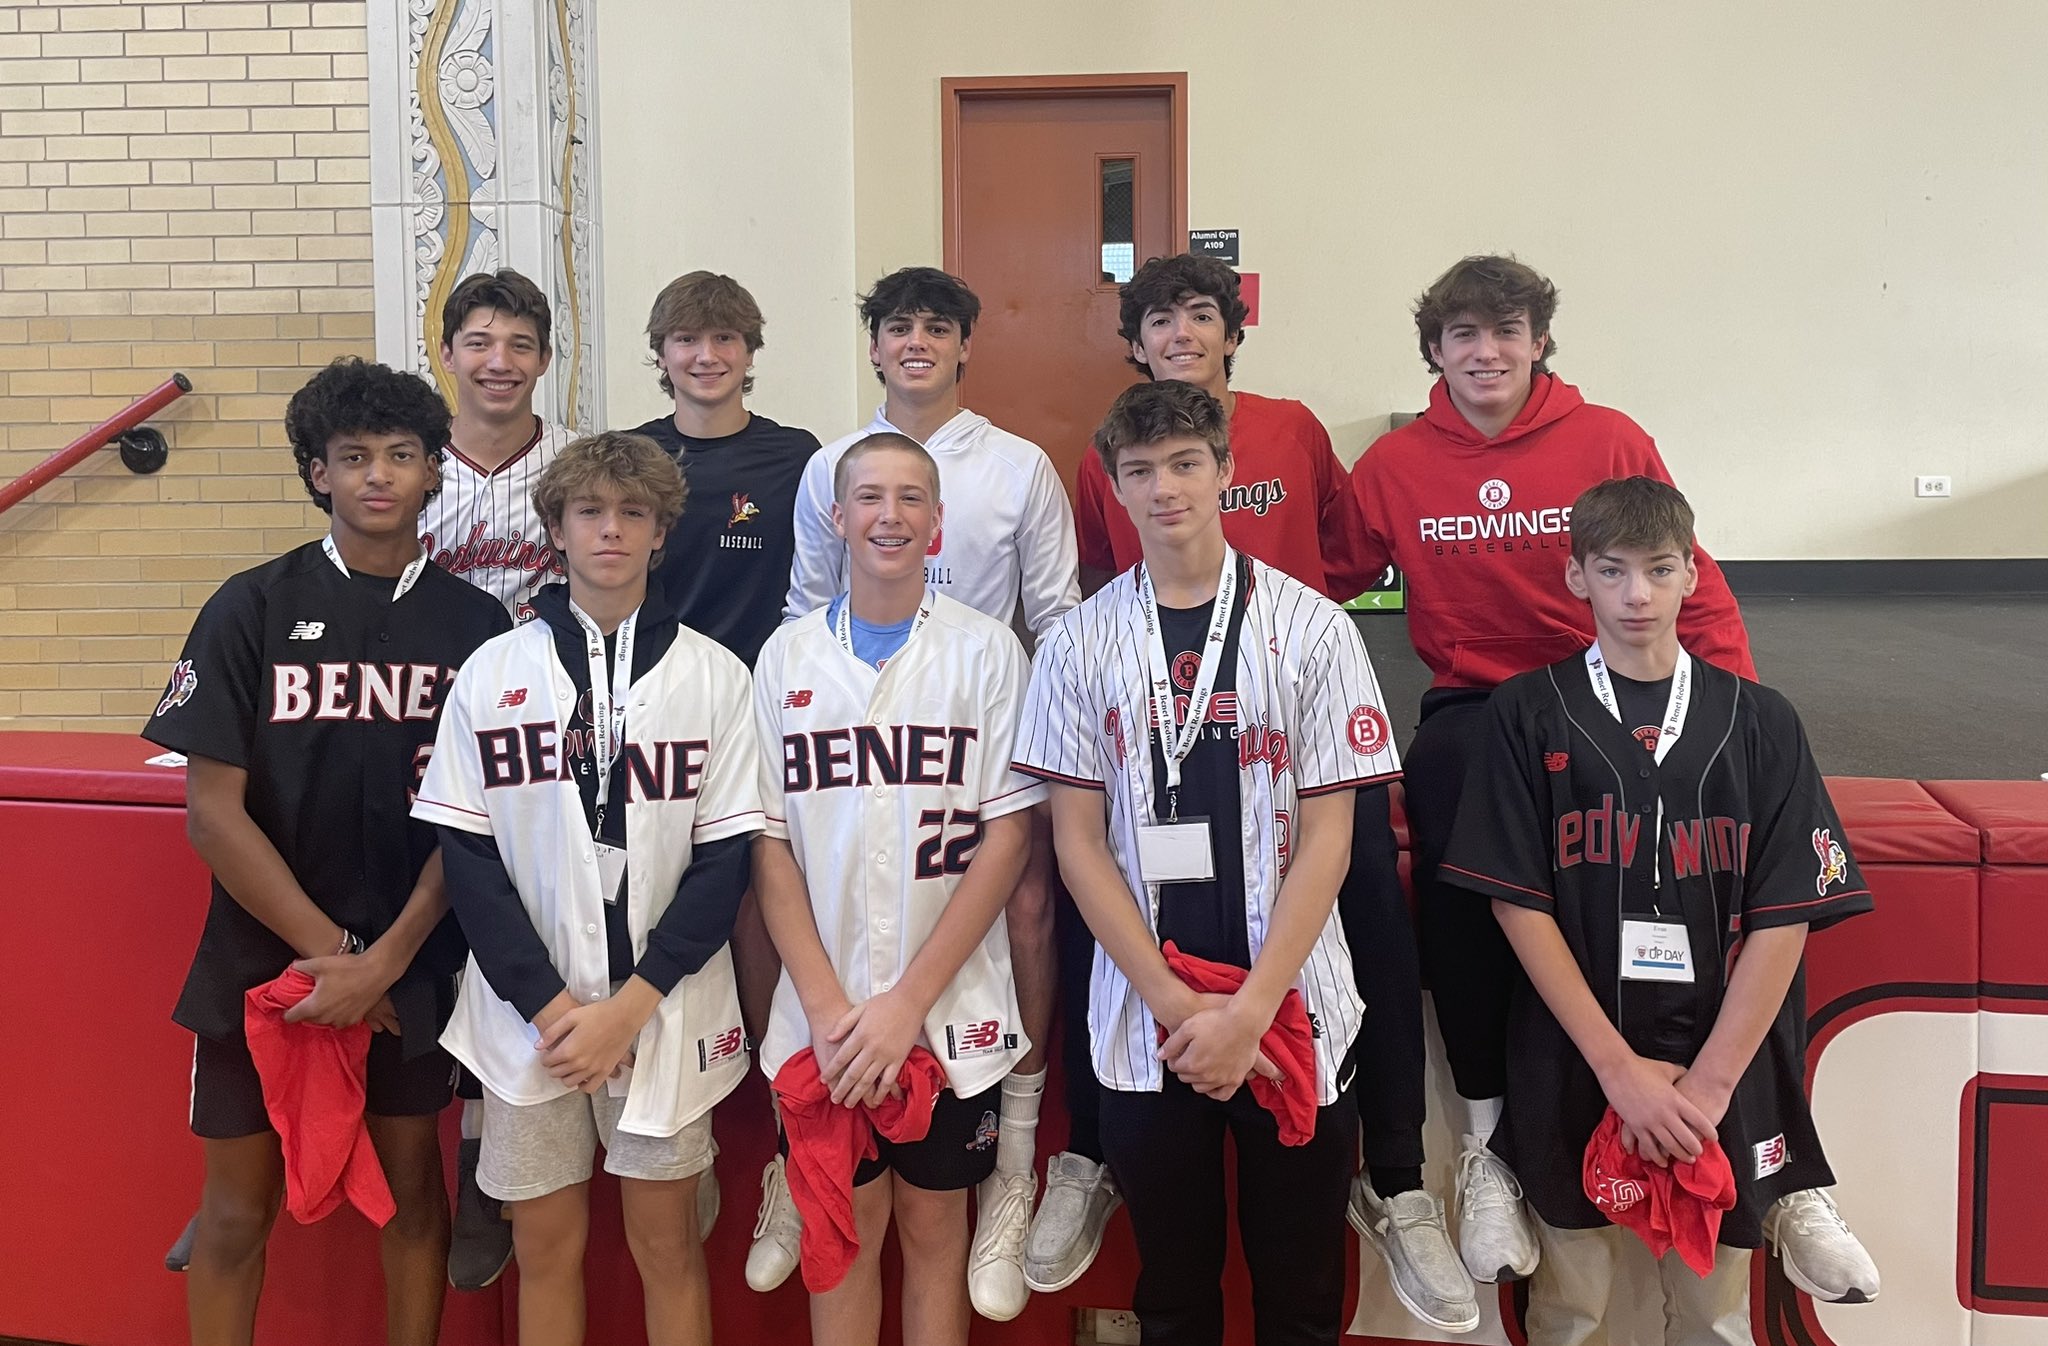 Benet Academy baseball team